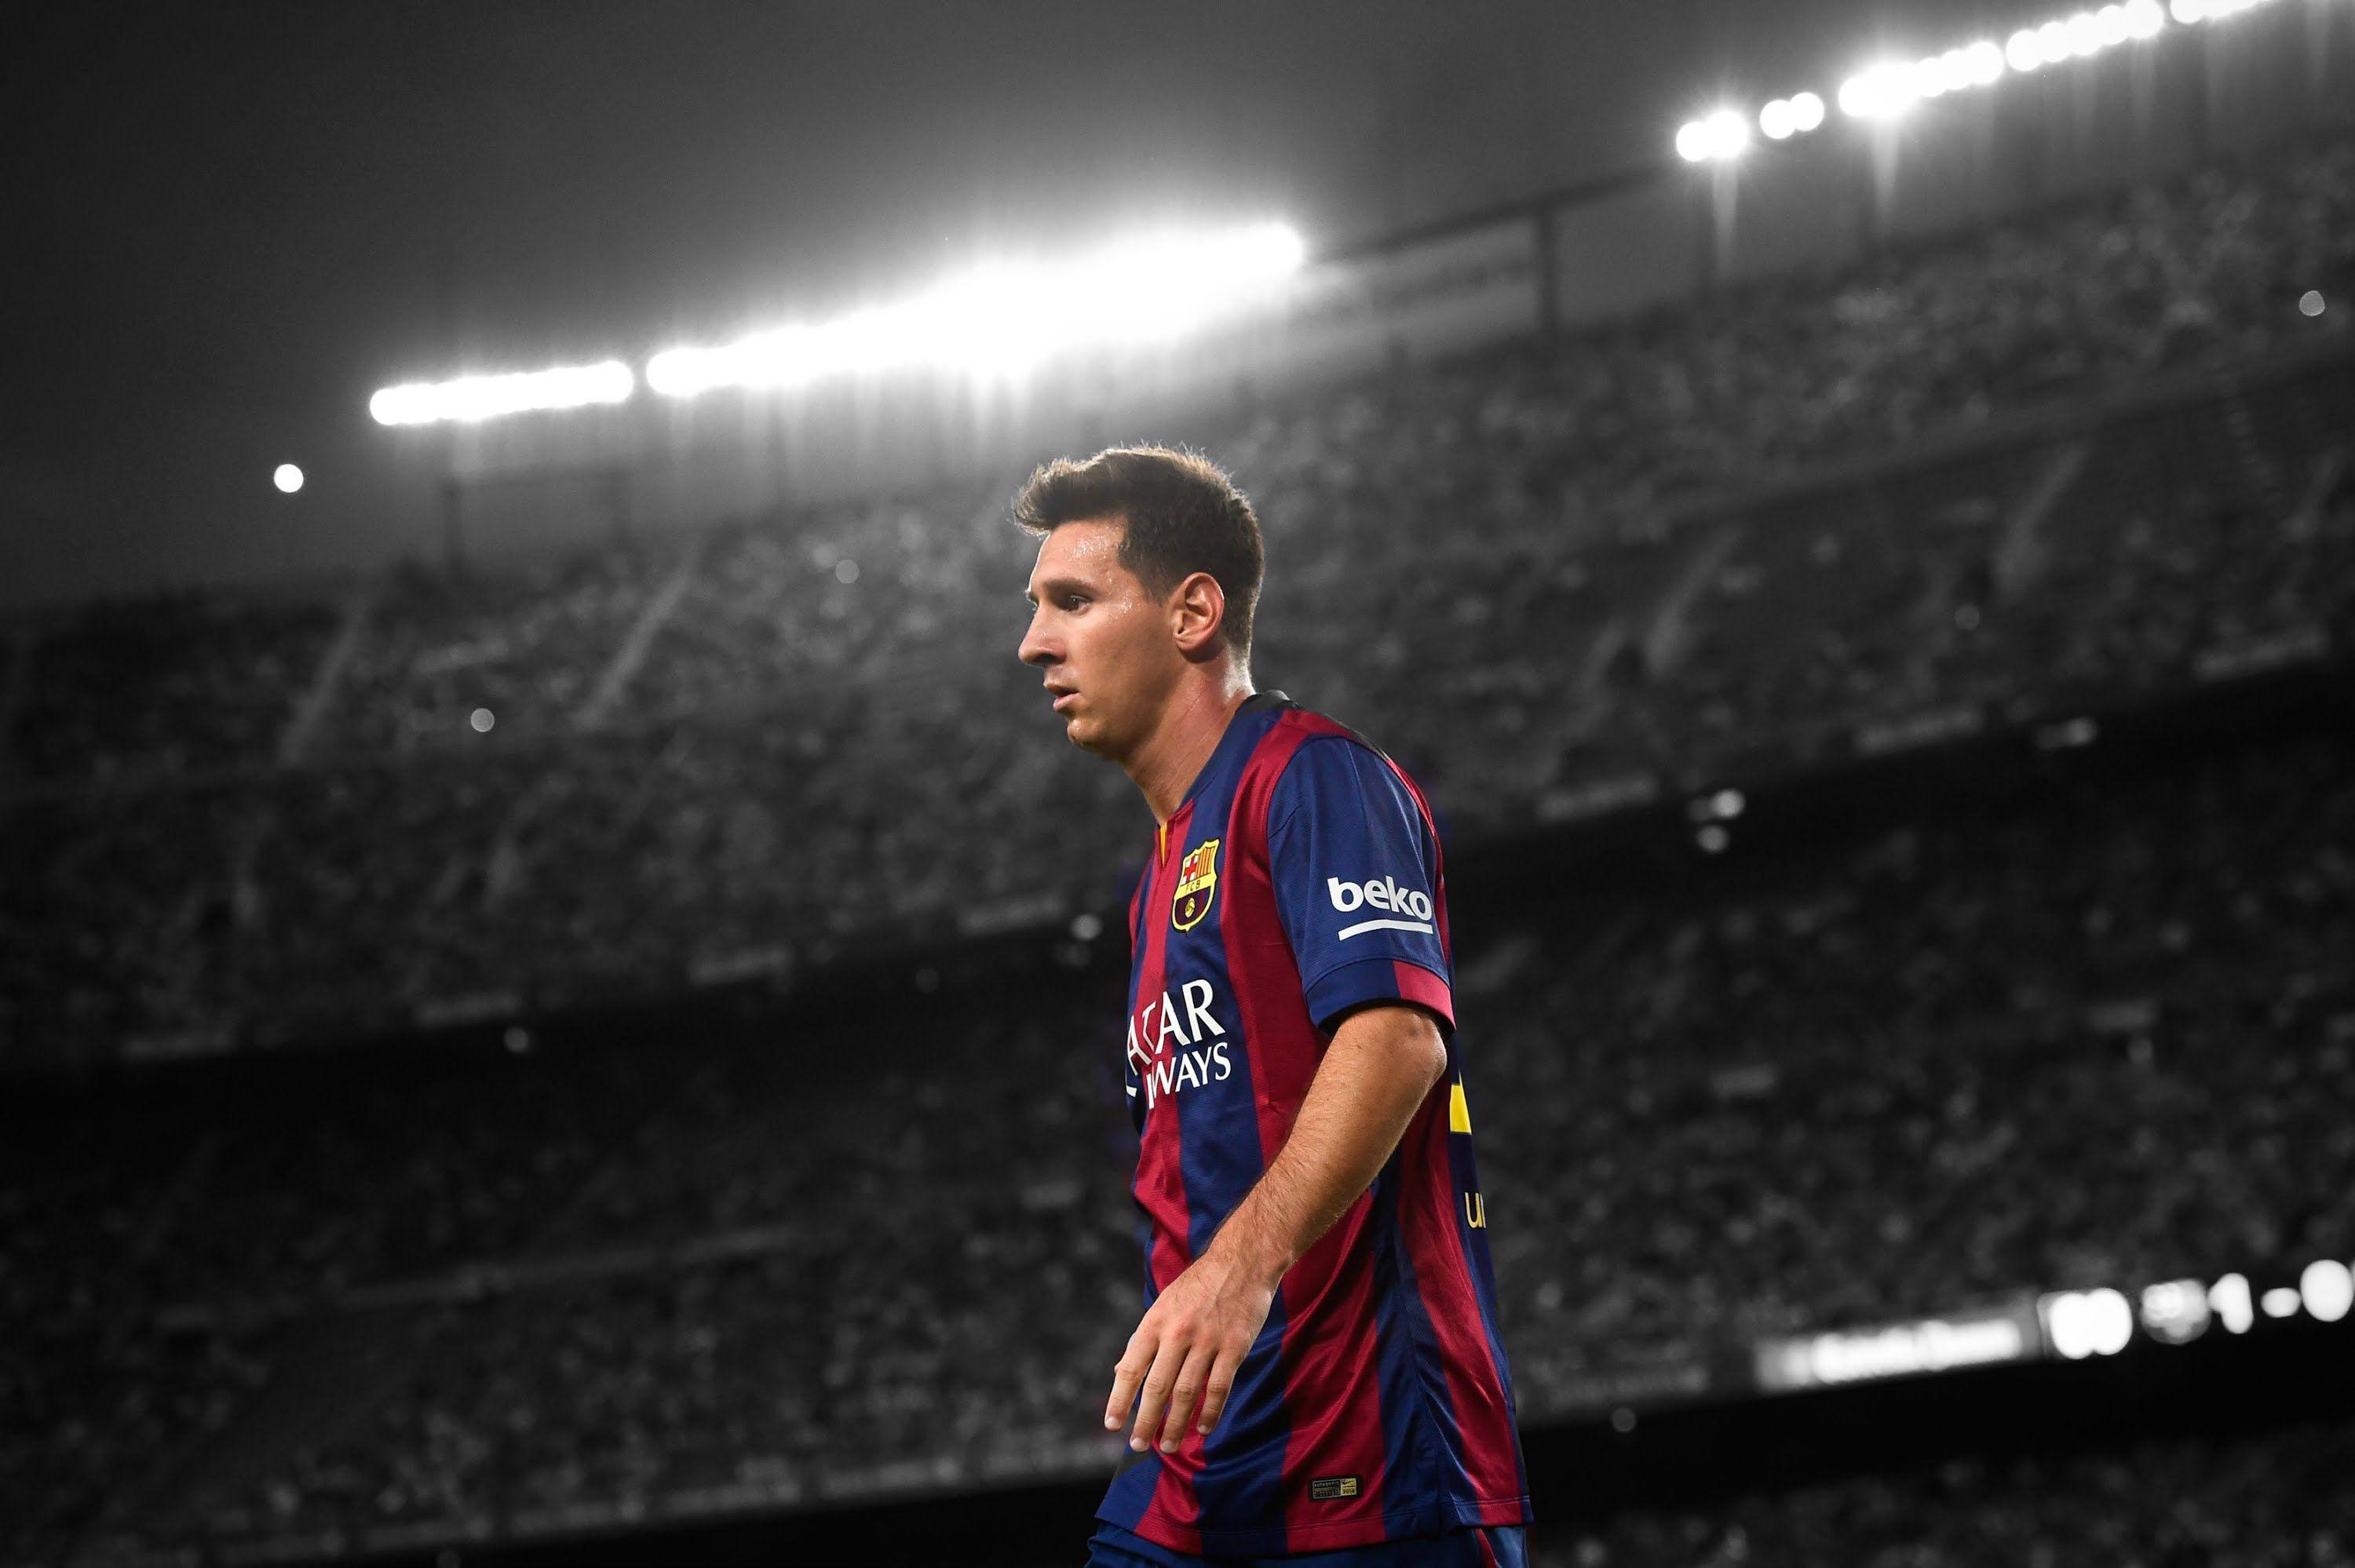 Lionel Messi Wallpaper HD download free. Wallpaper, Background